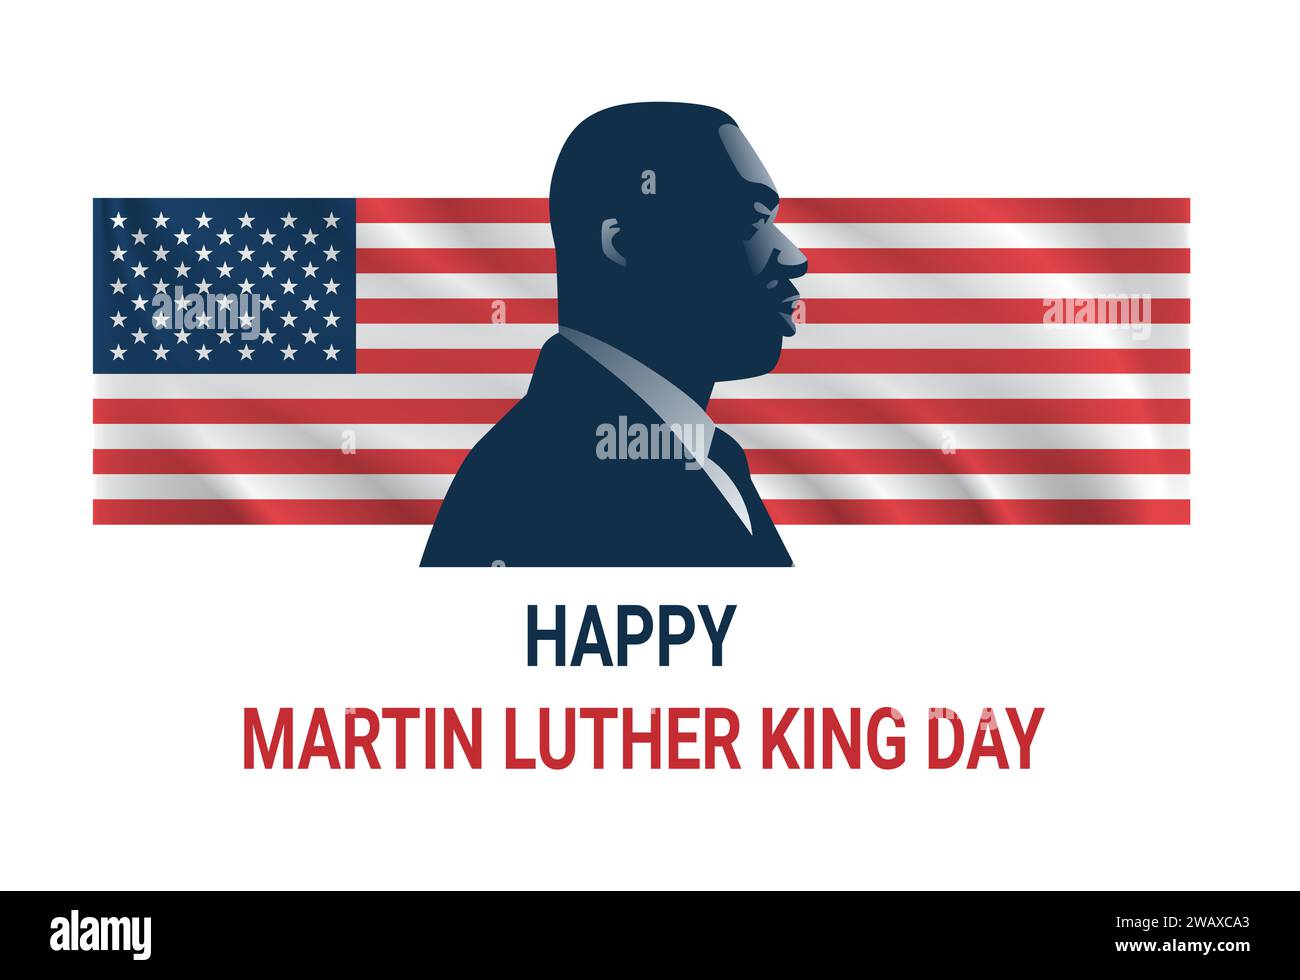 Martin Luther King Jr. Day black man and USA flag MLK banner horizontal ...